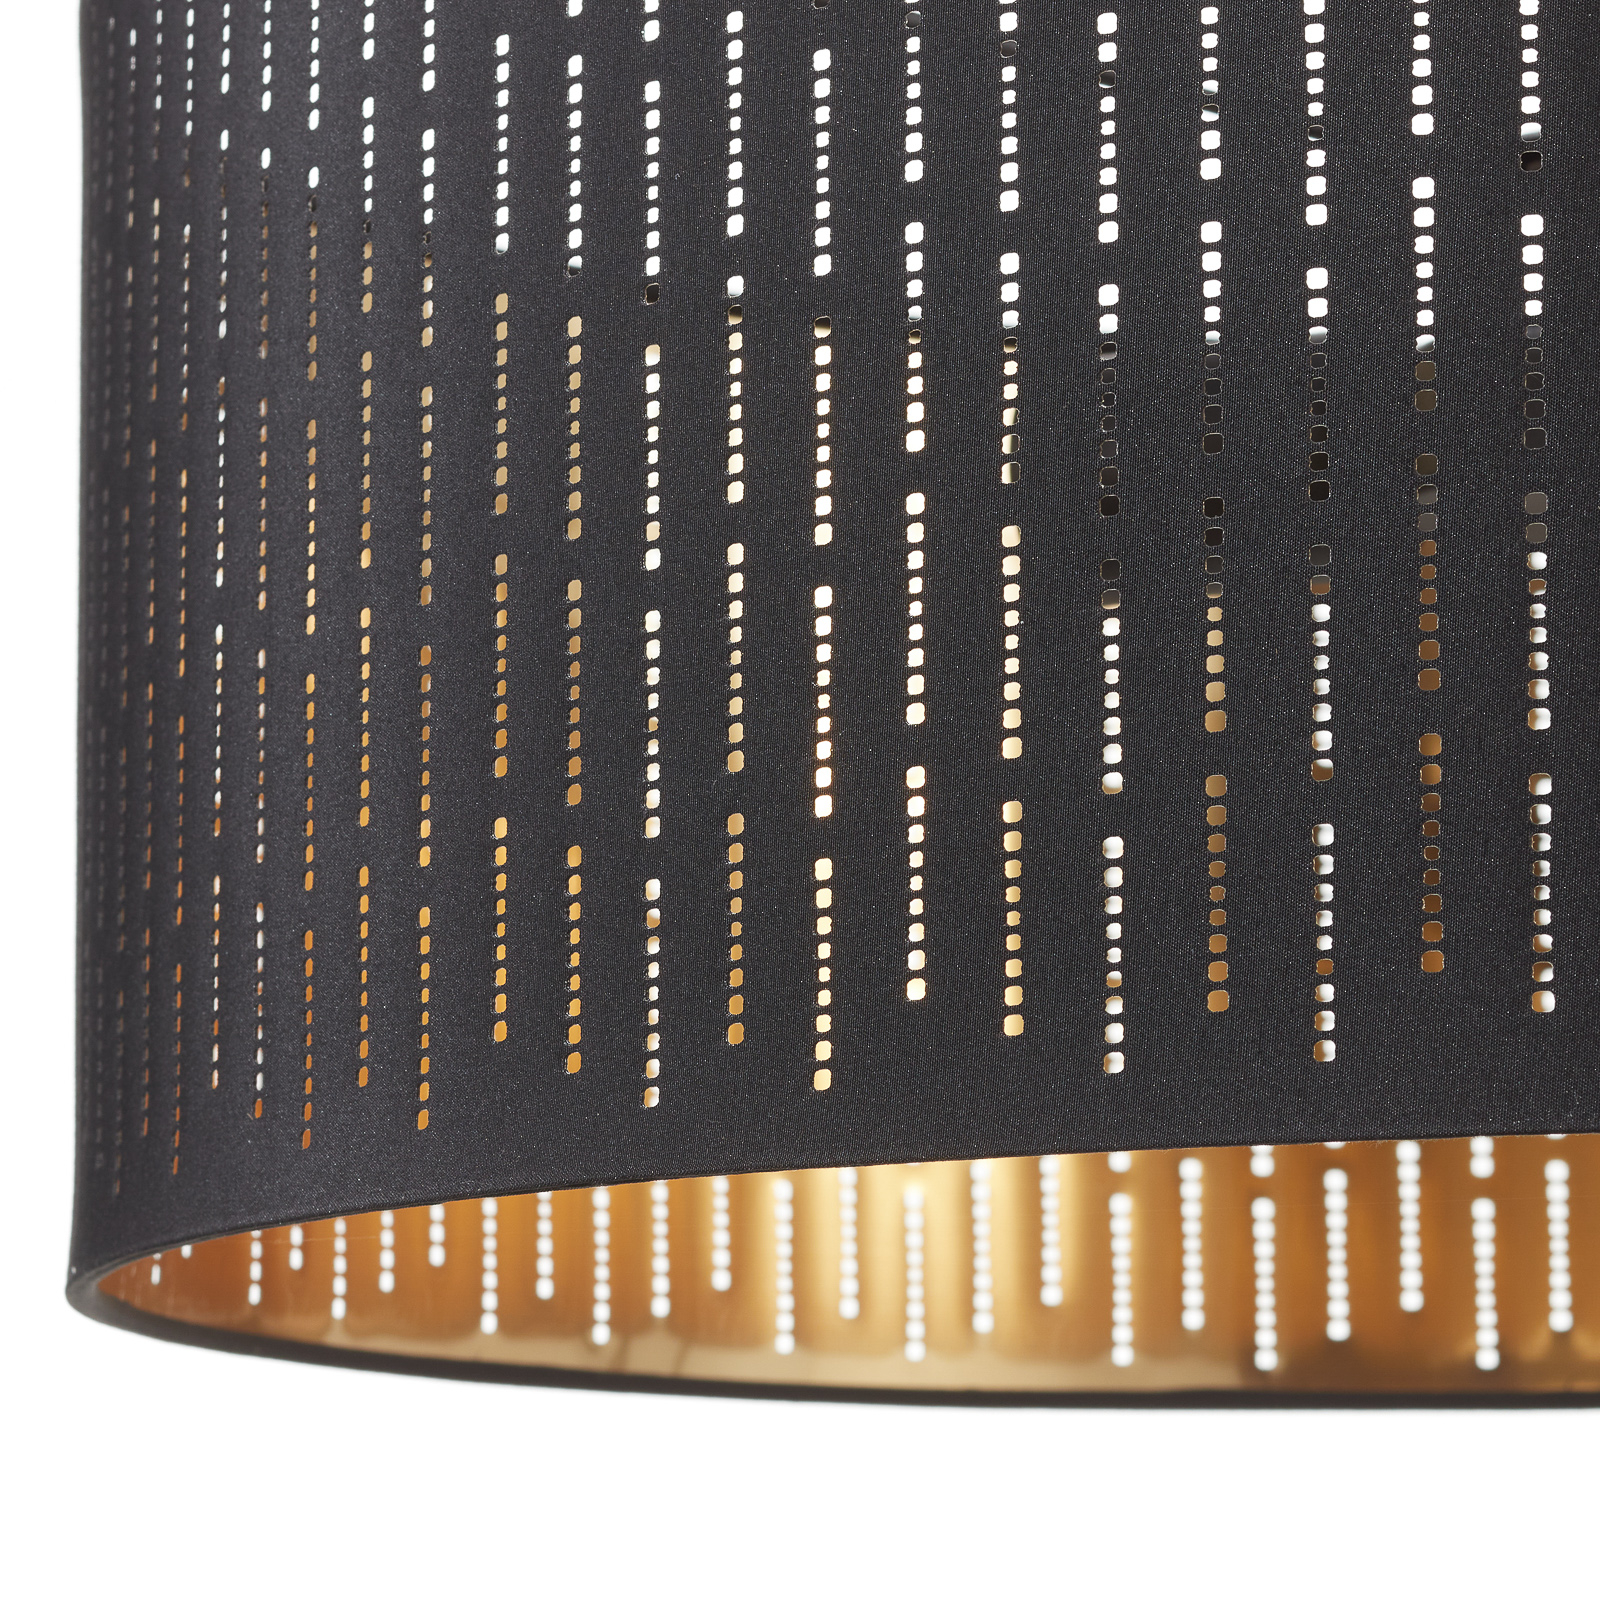 Hanglamp Varillas in zwart/goud, 53 cm